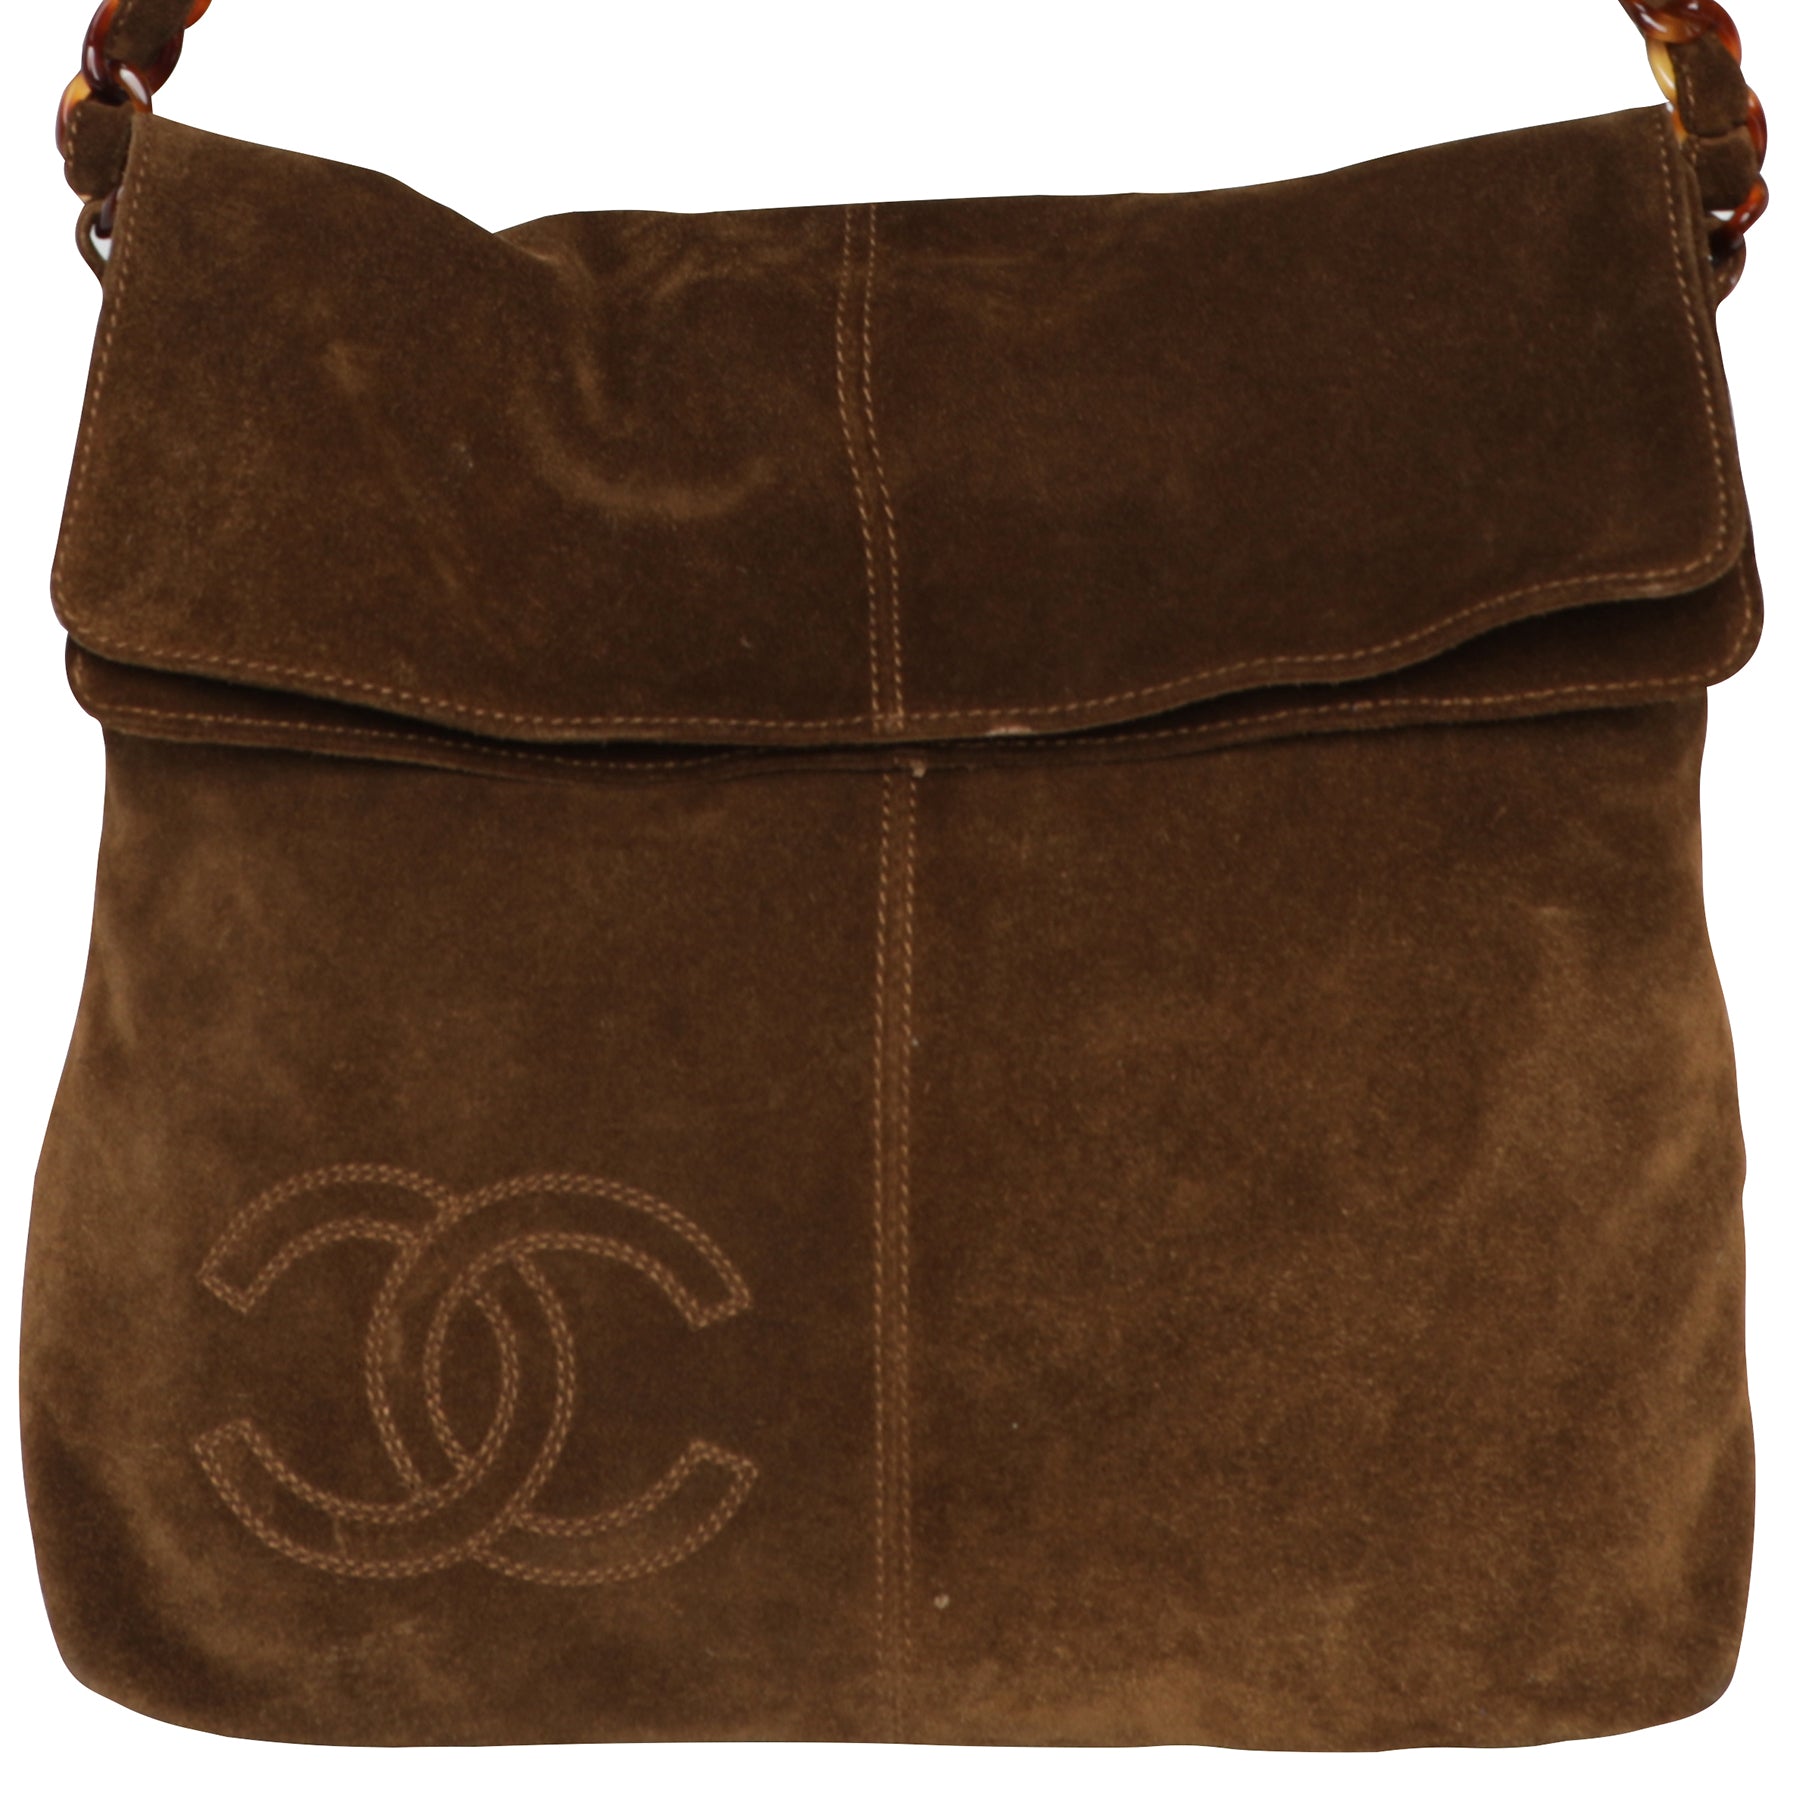 Chanel Messenger Bags